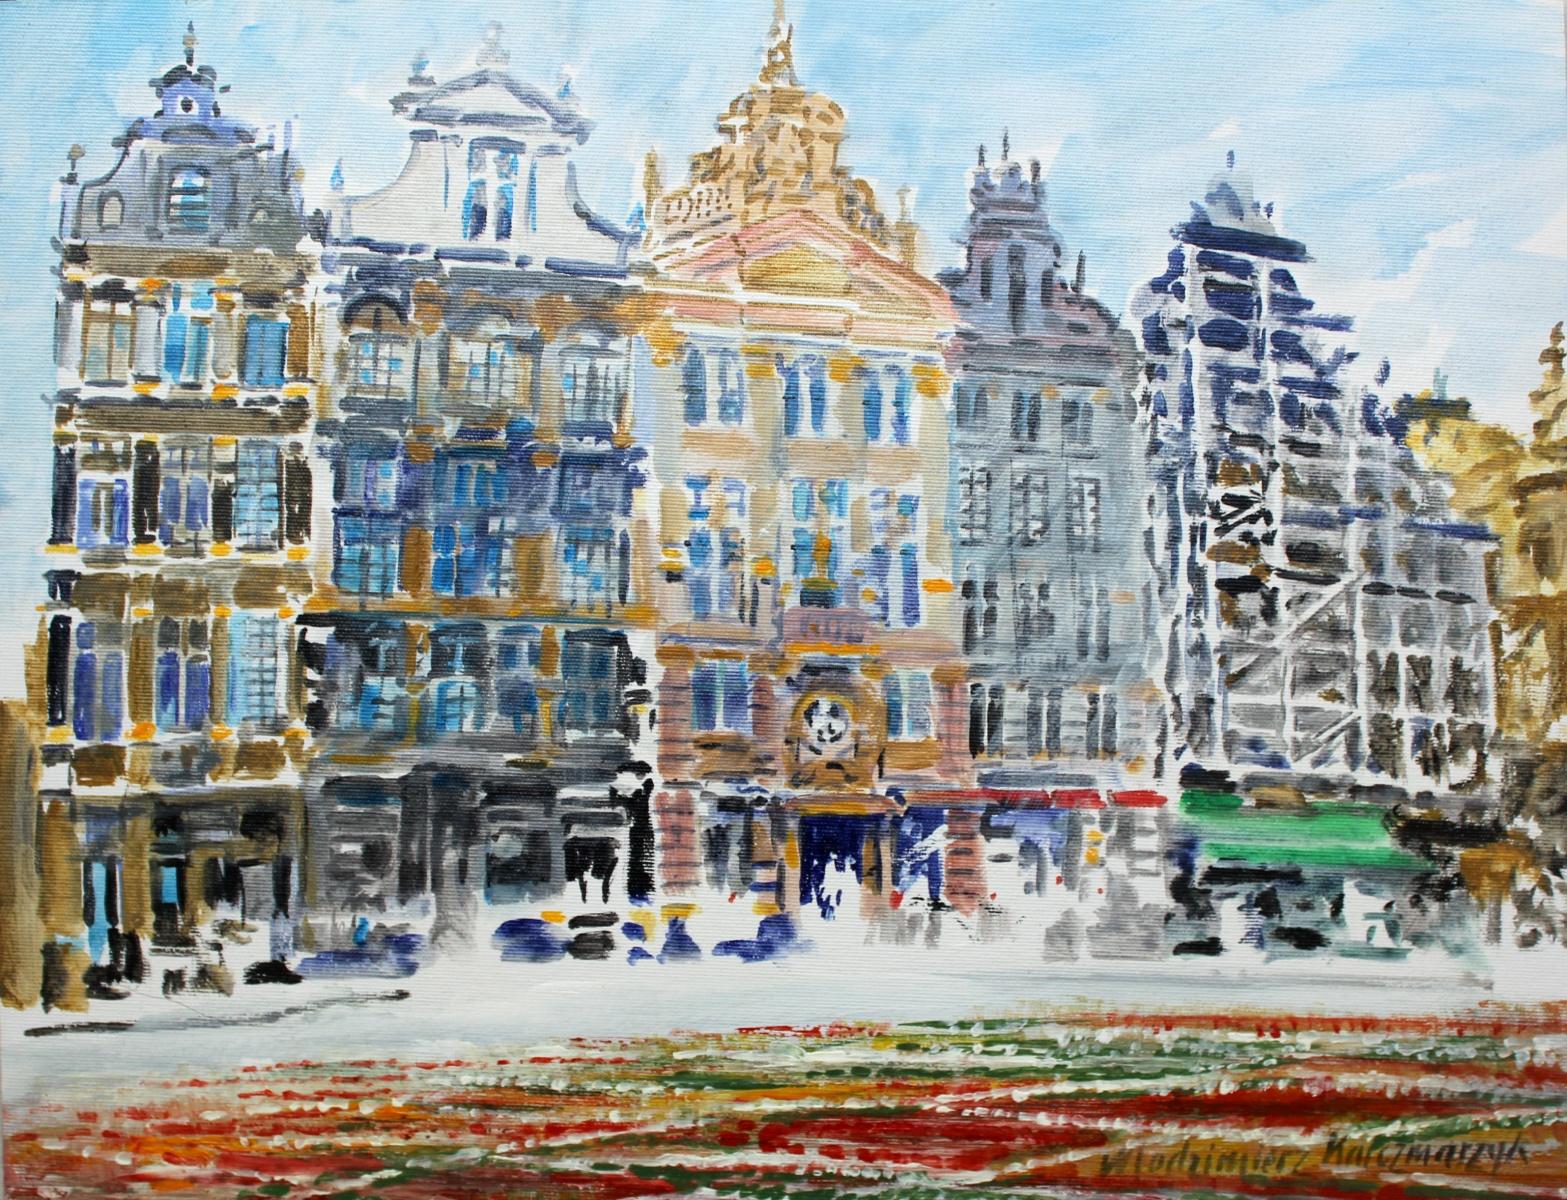 Włodzimierz Karczmarzyk Landscape Art - Brussels - the Townhouses - 21 century watercolor painting, Landscape, Realistic